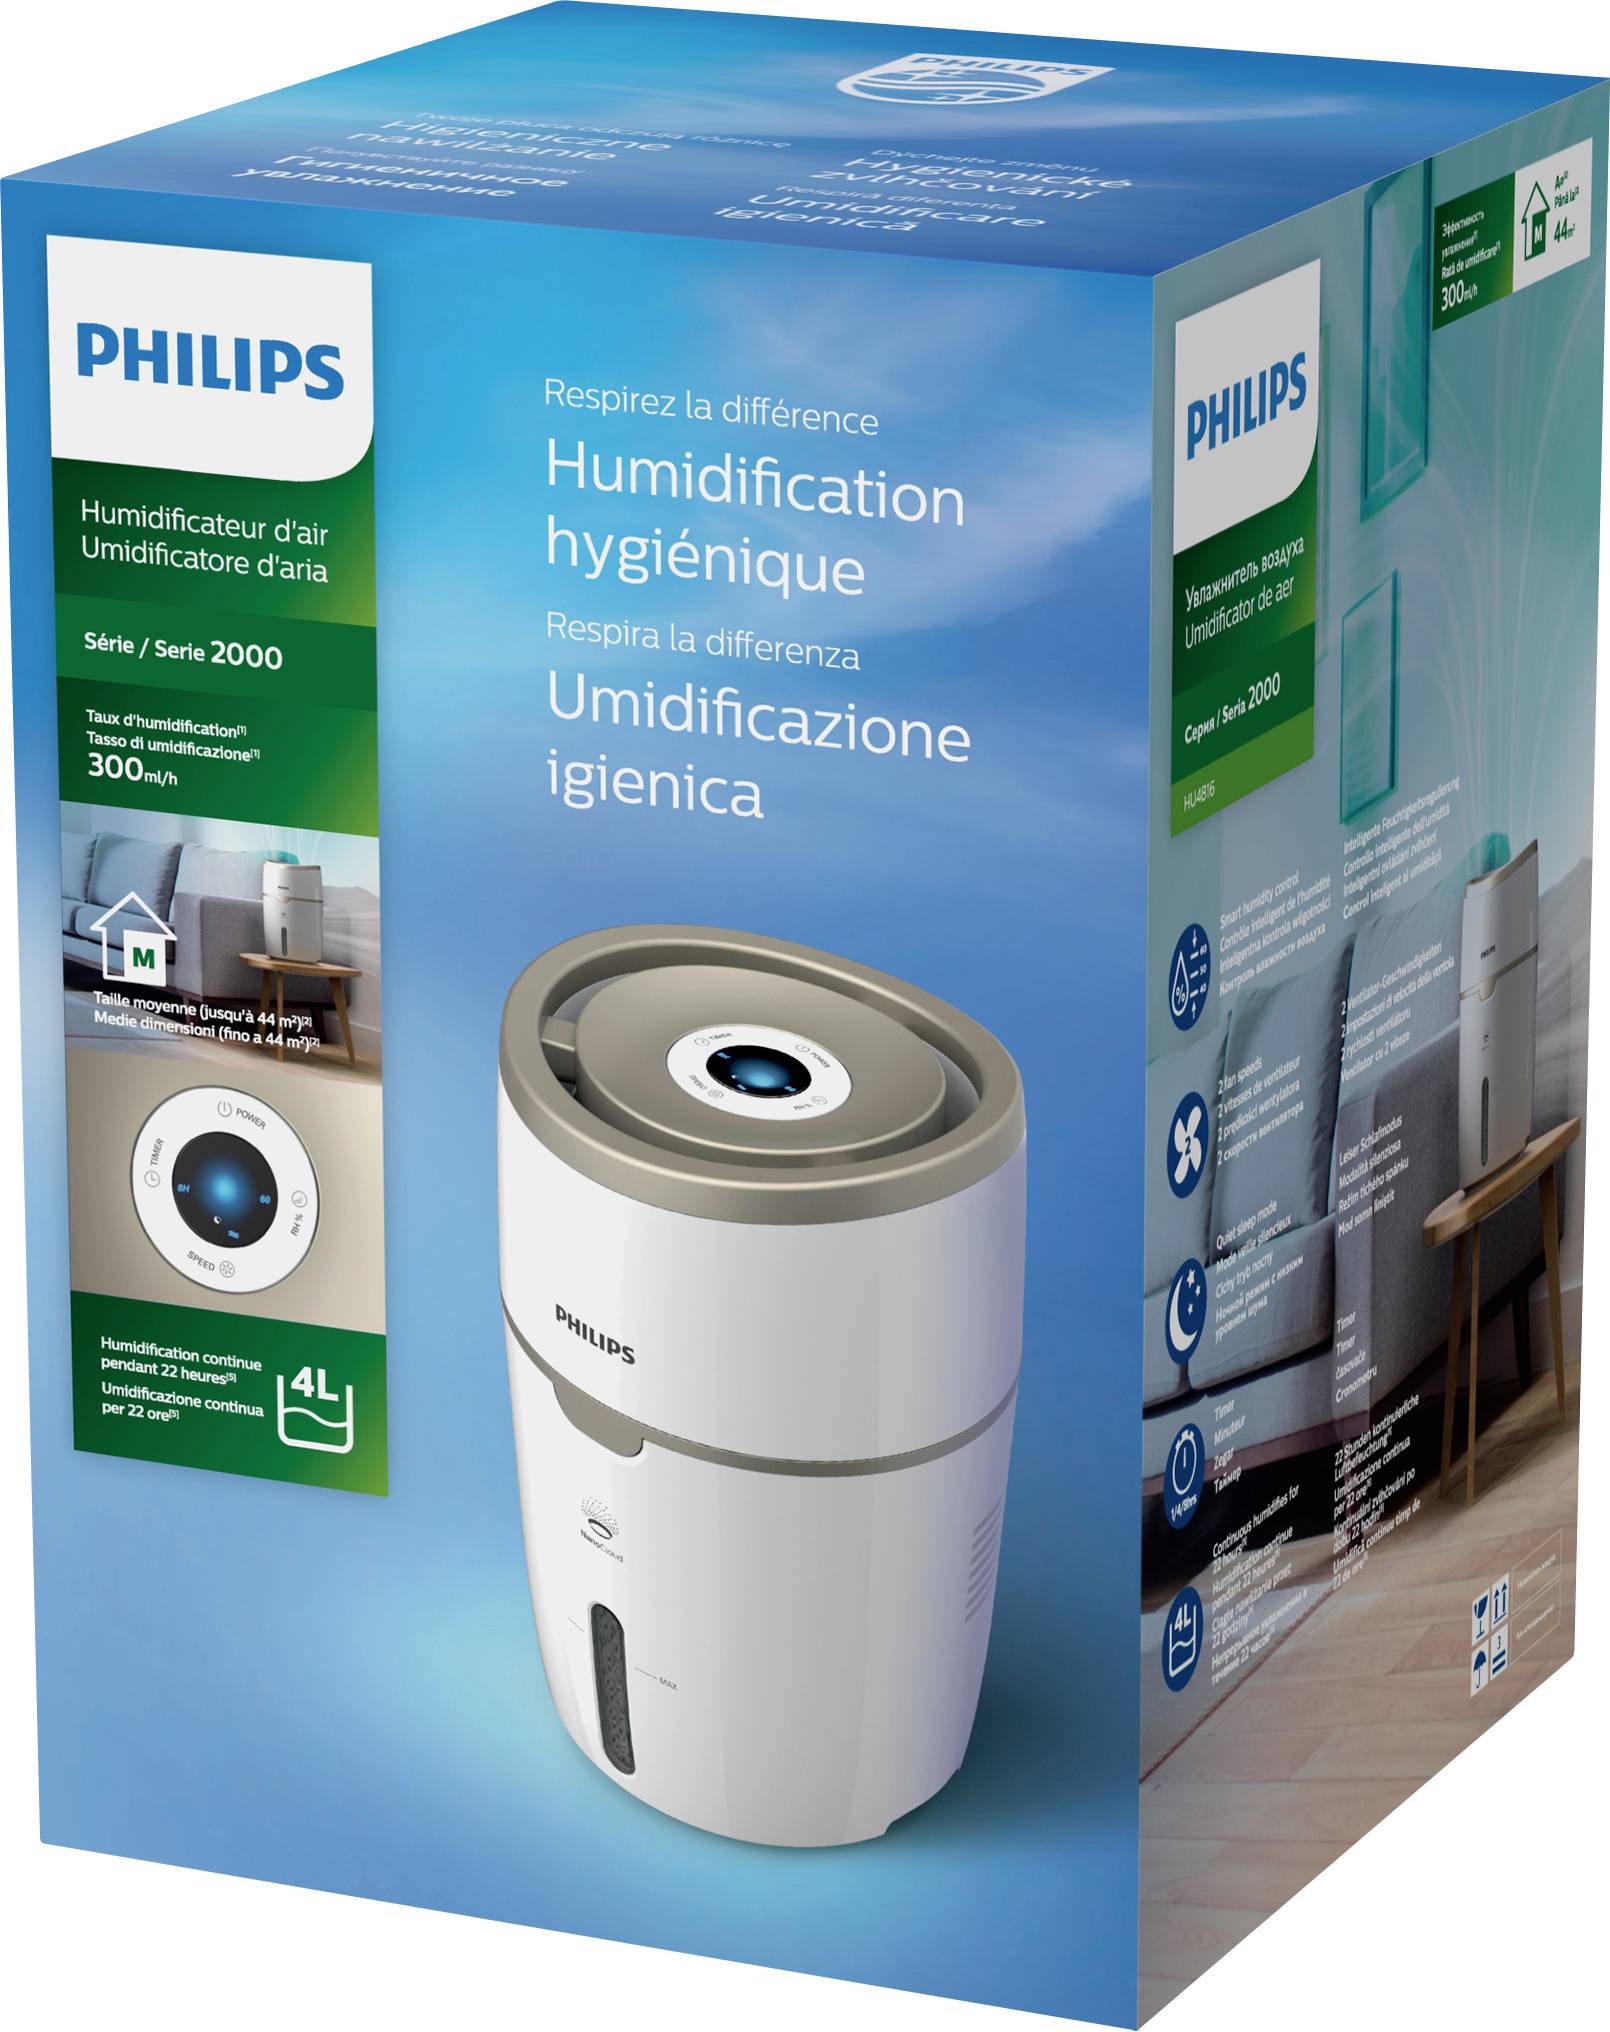 Philips hu4816. Philips увлажнитель 2000. Увлажнитель воздуха Philips NANOCLOUD. Hu3918/10 увлажнитель. Филипс 2000 series